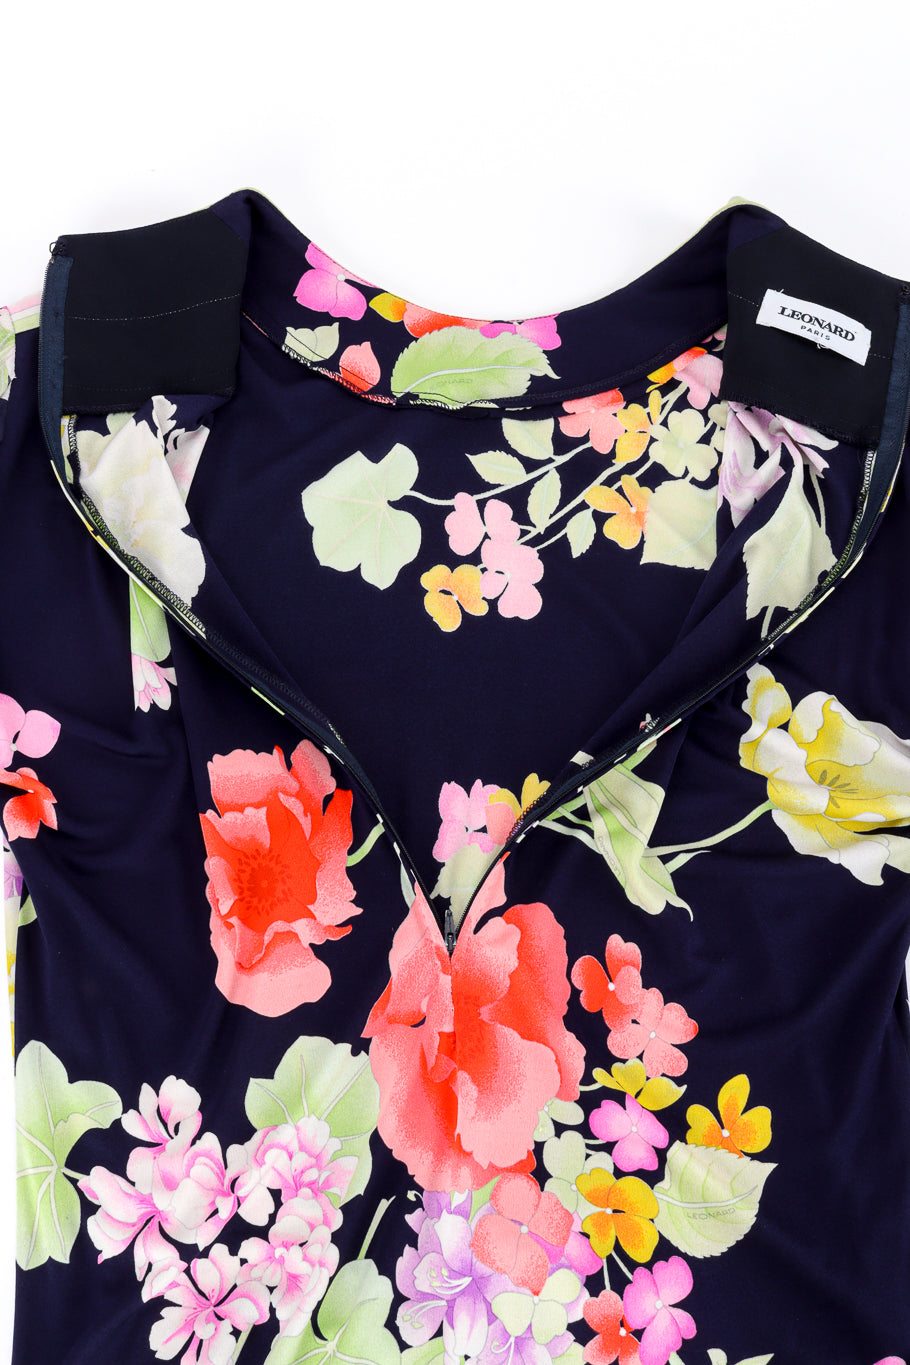 Vintage Leonard Floral Silk Jersey Dress back unzipped @recess la